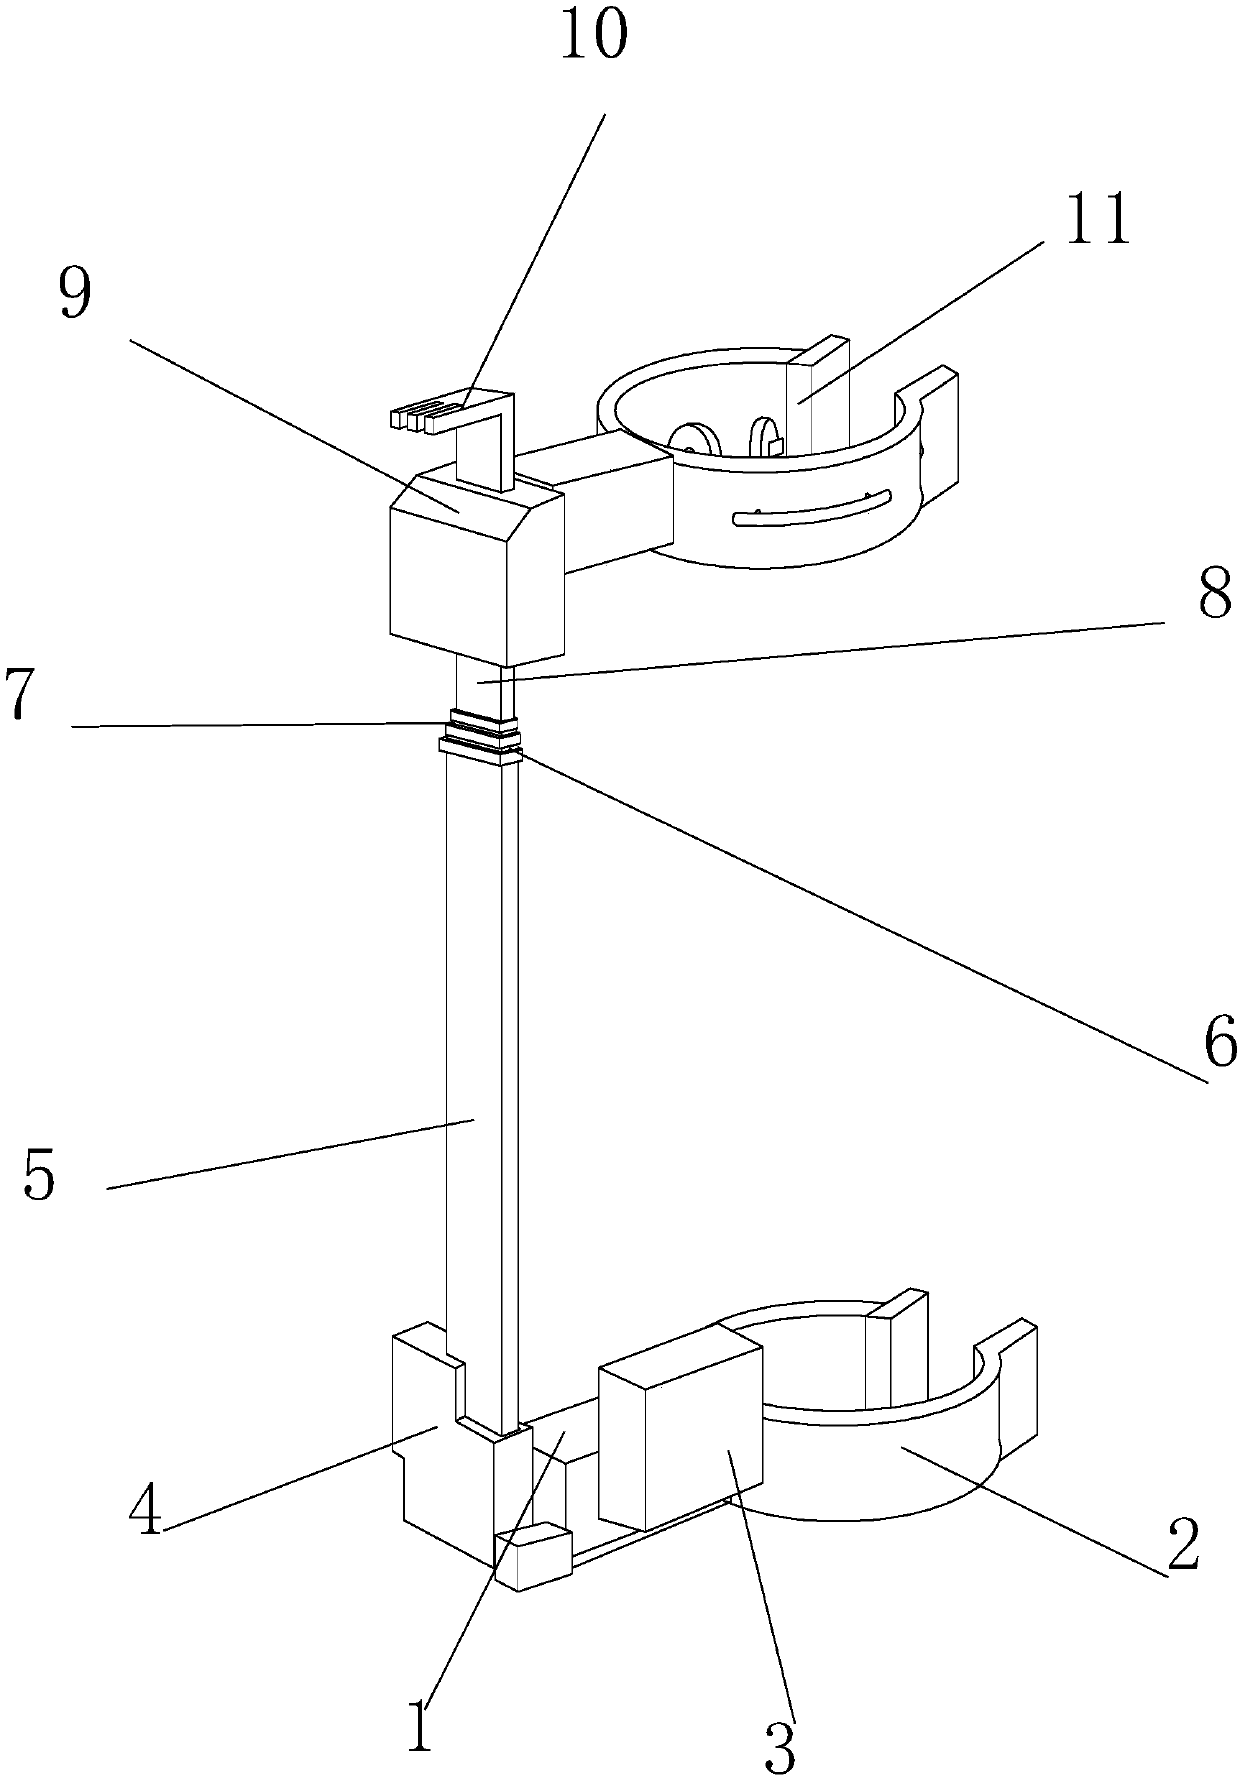 Power automatic pole-climbing wire feeding device